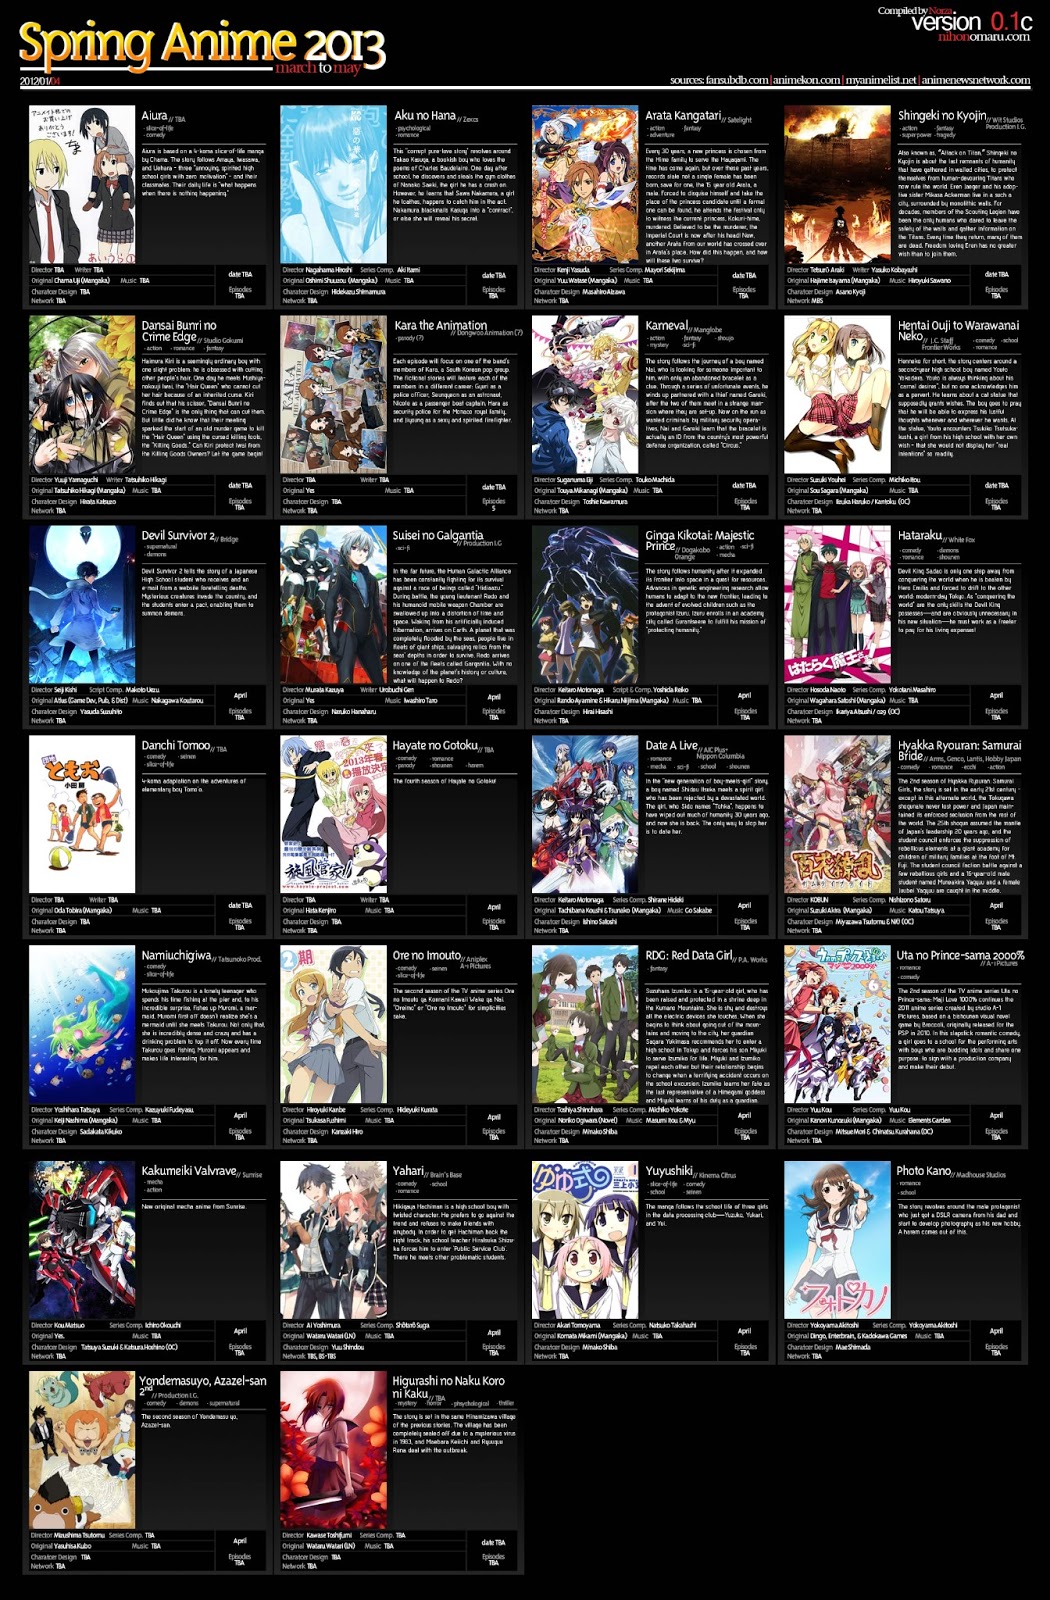 Broken Otaku: New anime season spring 2013